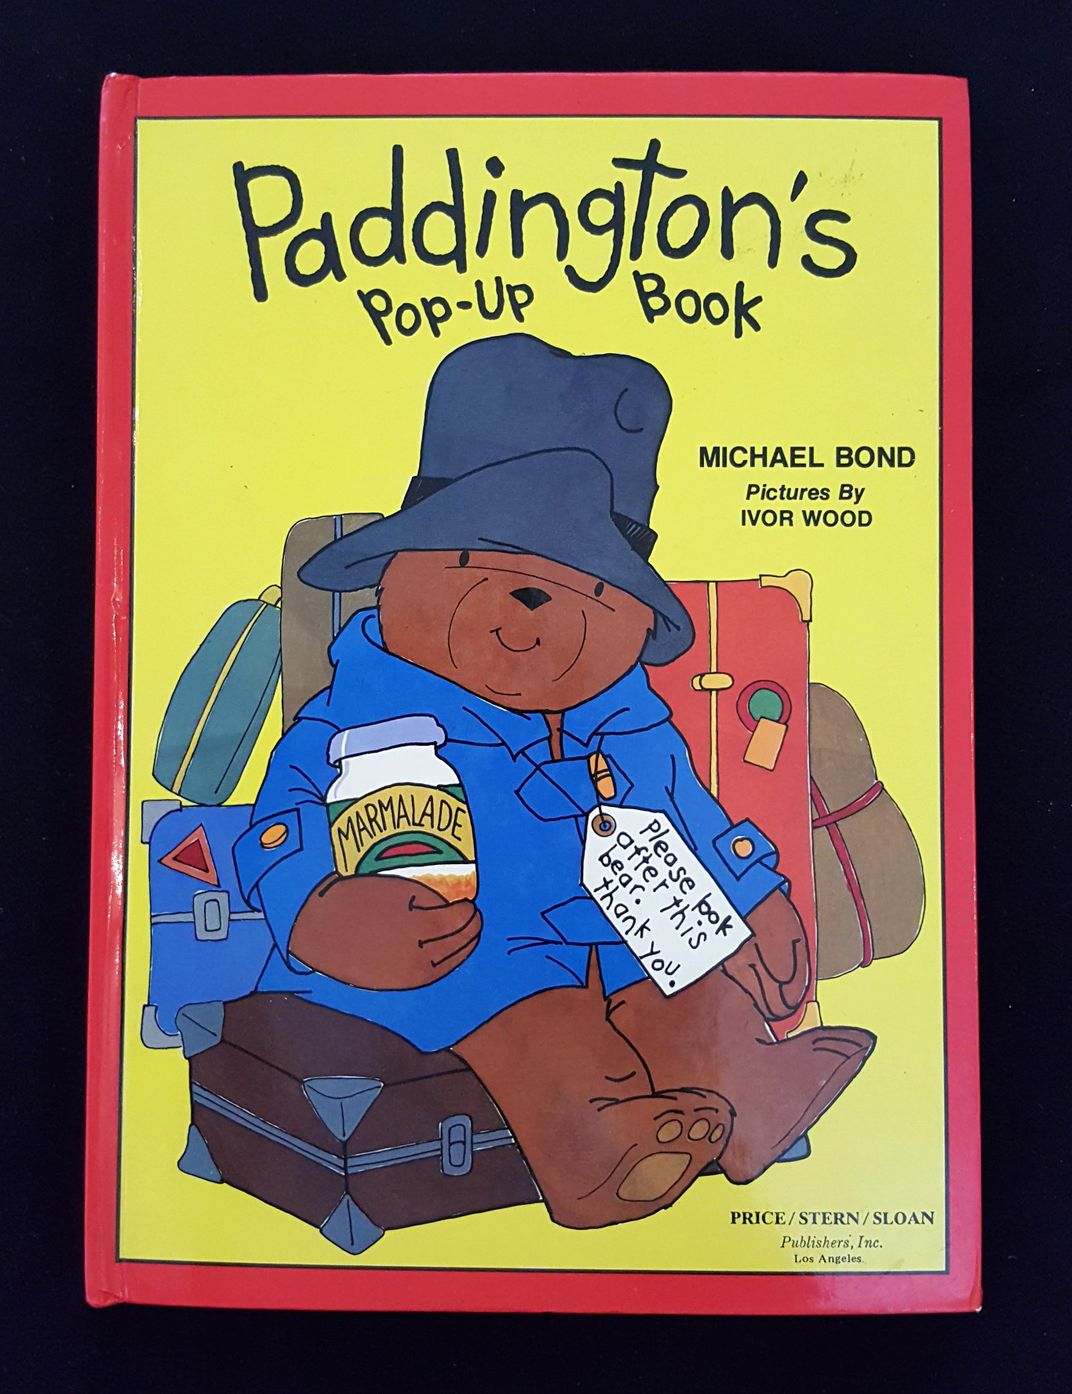 Paddington's Pop-Up Book